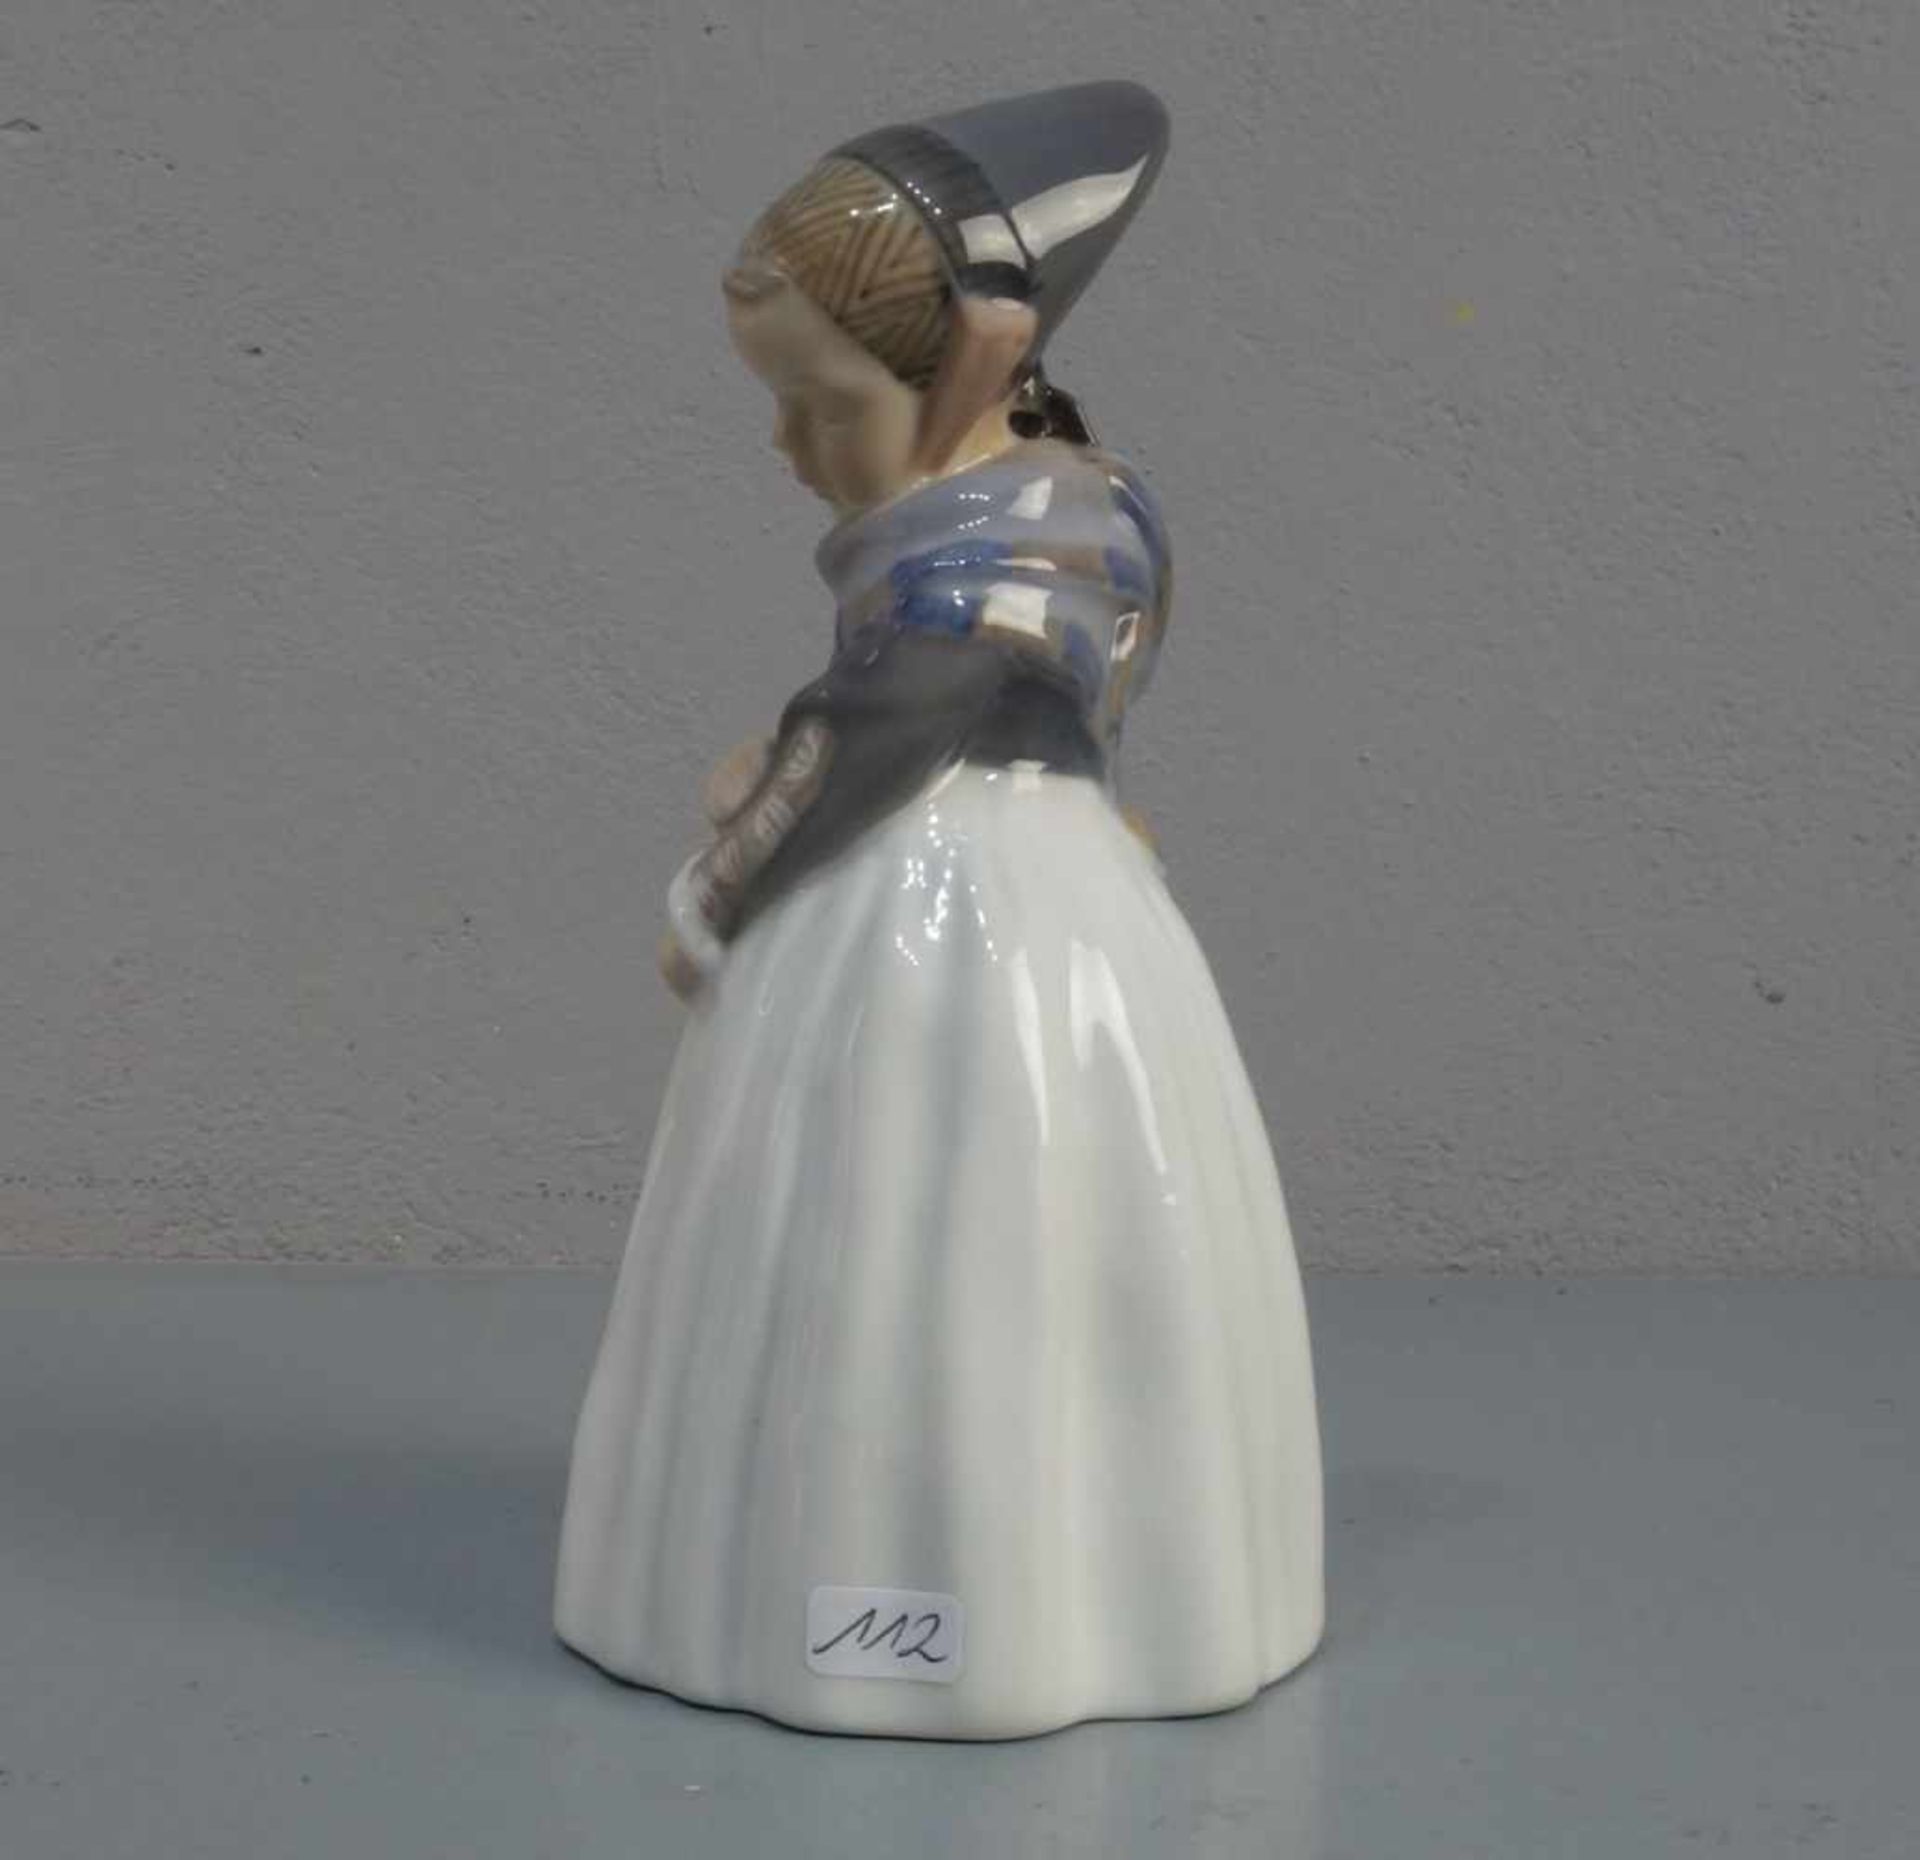 PORZELLANFIGUR / porcelain figure: "Stehendes Mädchen in Amager Tracht", Manufaktur Royal - Bild 2 aus 5